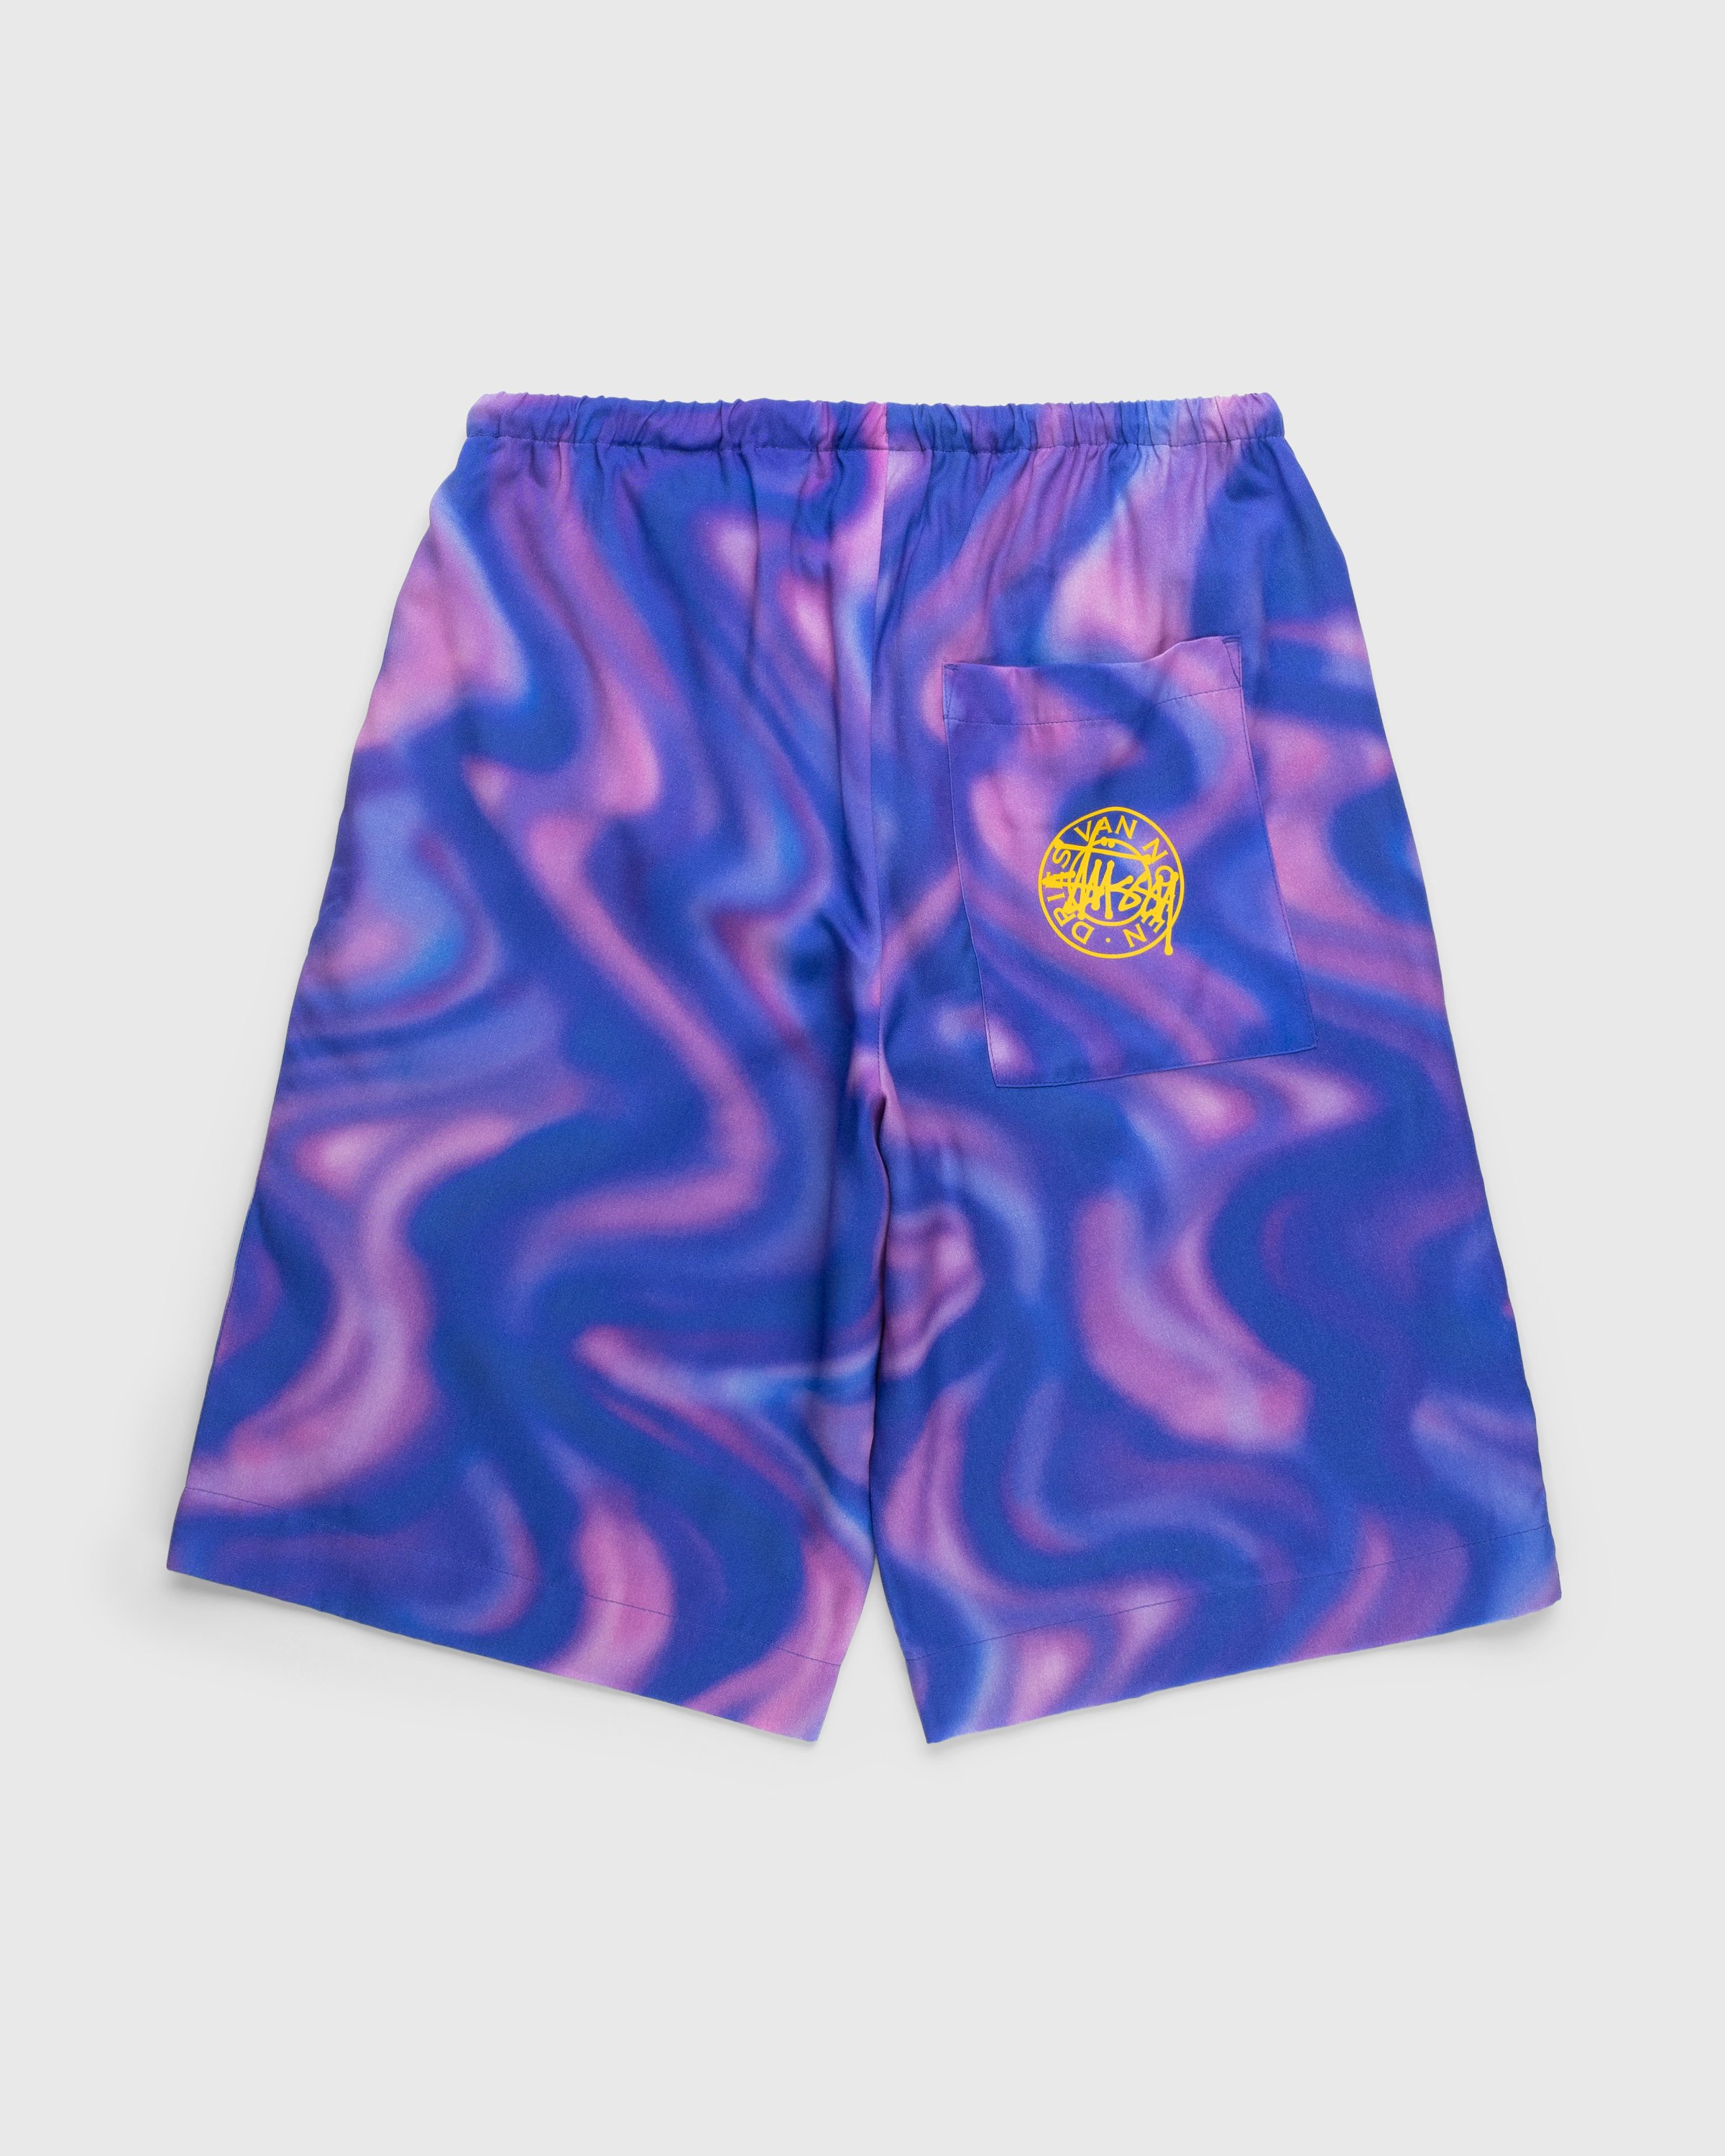 Stüssy x Dries van Noten - Airbrush Shrooms Shorts - Clothing - Purple - Image 2